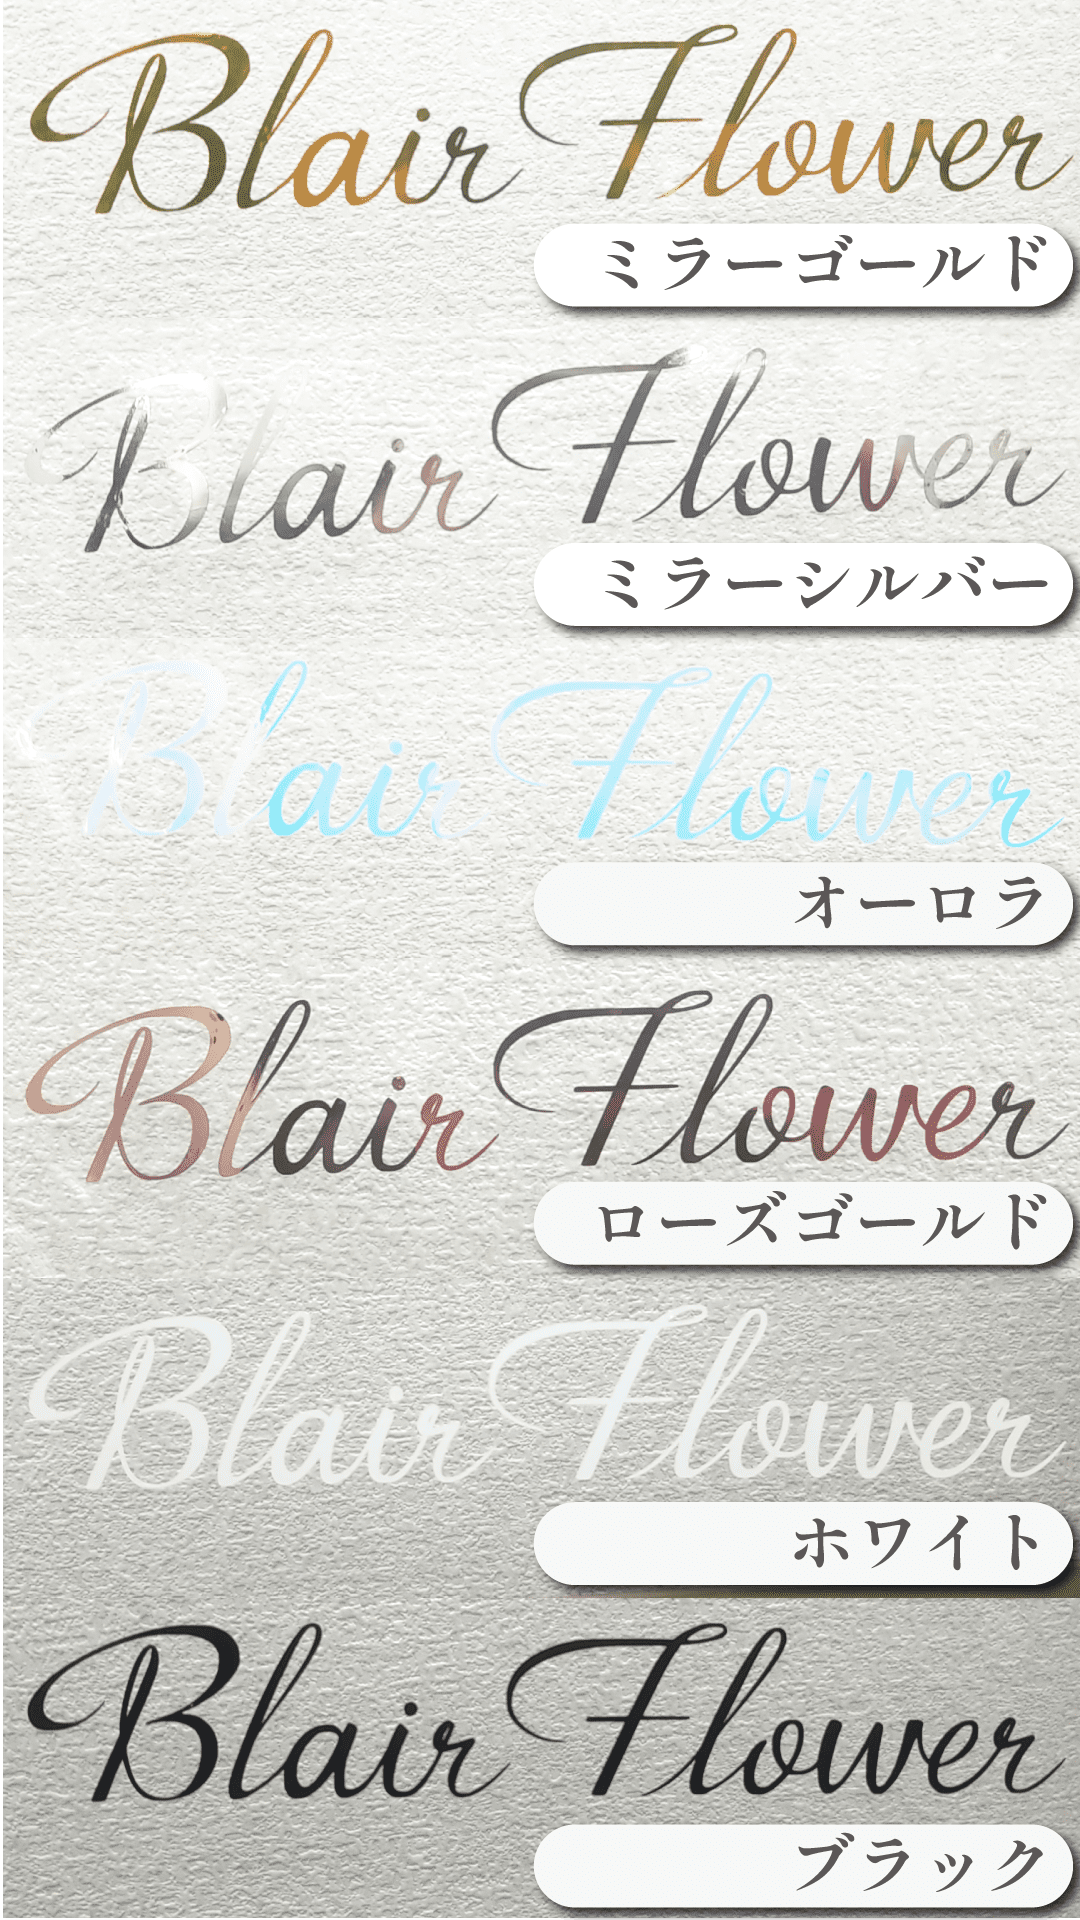 Bubble bouquet（バブルブーケ） 002 M size - blairflower